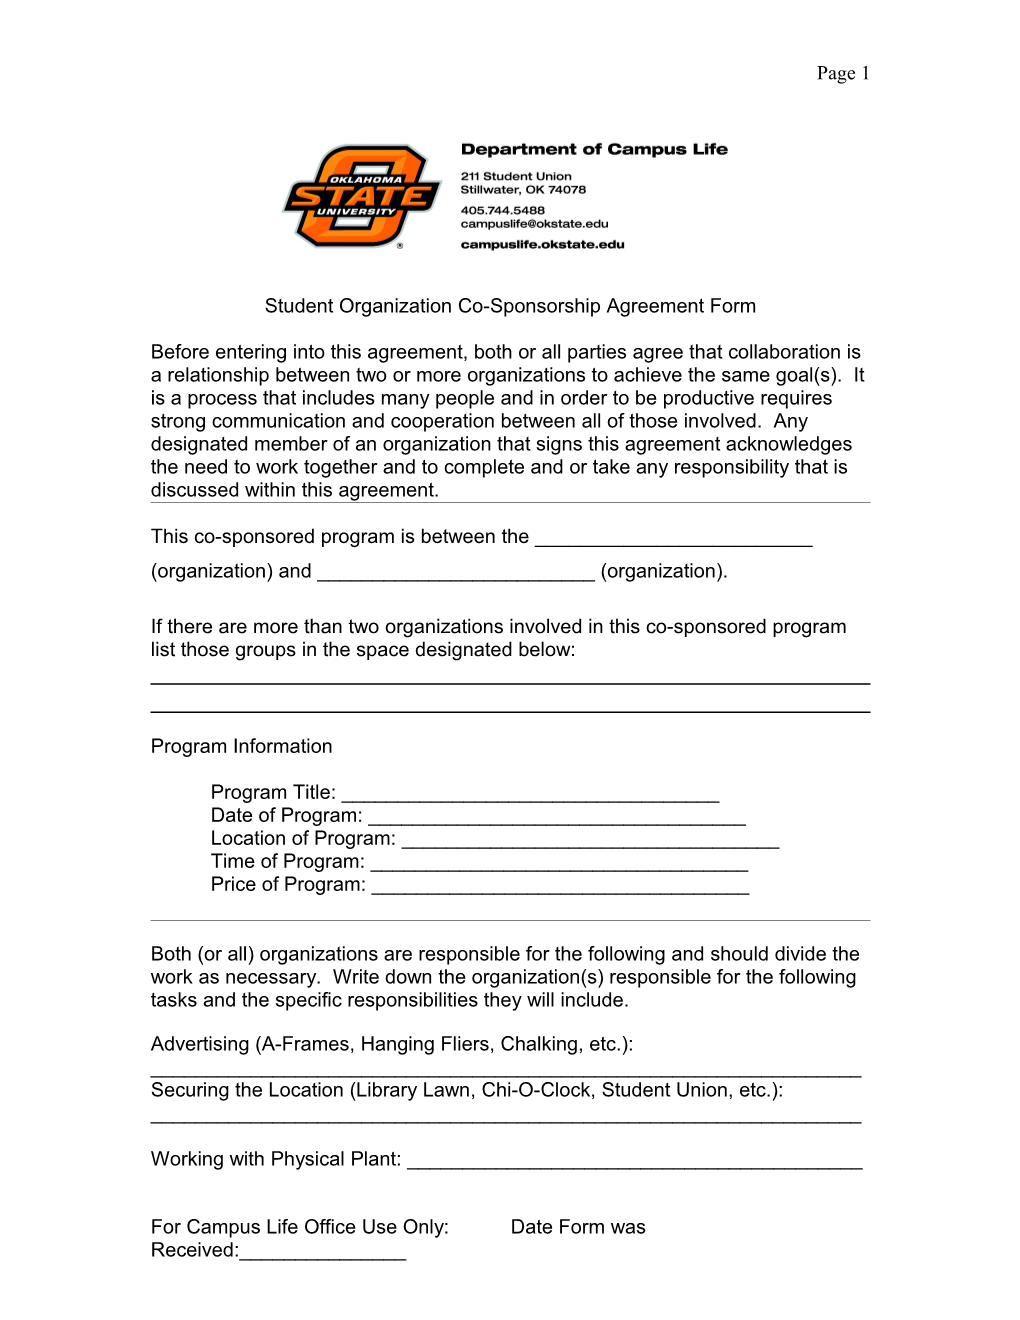 Student Organization Co-Sponsorship Agreement Form